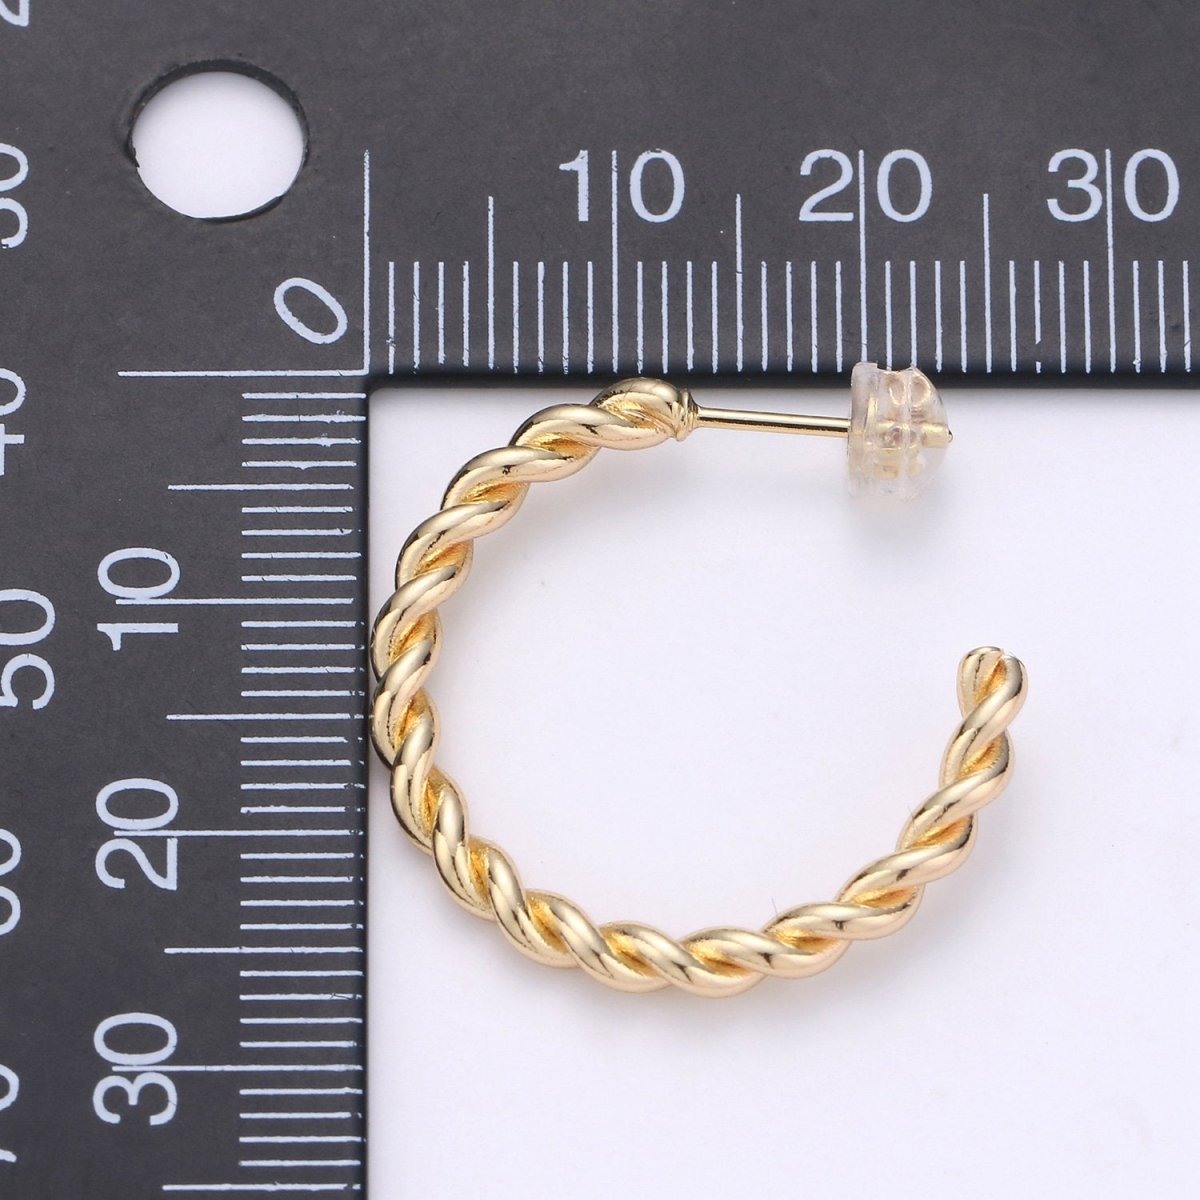 18k Gold Filled Twisted Rope Hoops,Swirl Twist Hoops, Twisted Hoops Gold, Gold Hoop Earrings, Minimalist Earrings, Boho Hoop Earrings Gift Q-092 - Q-094 - DLUXCA